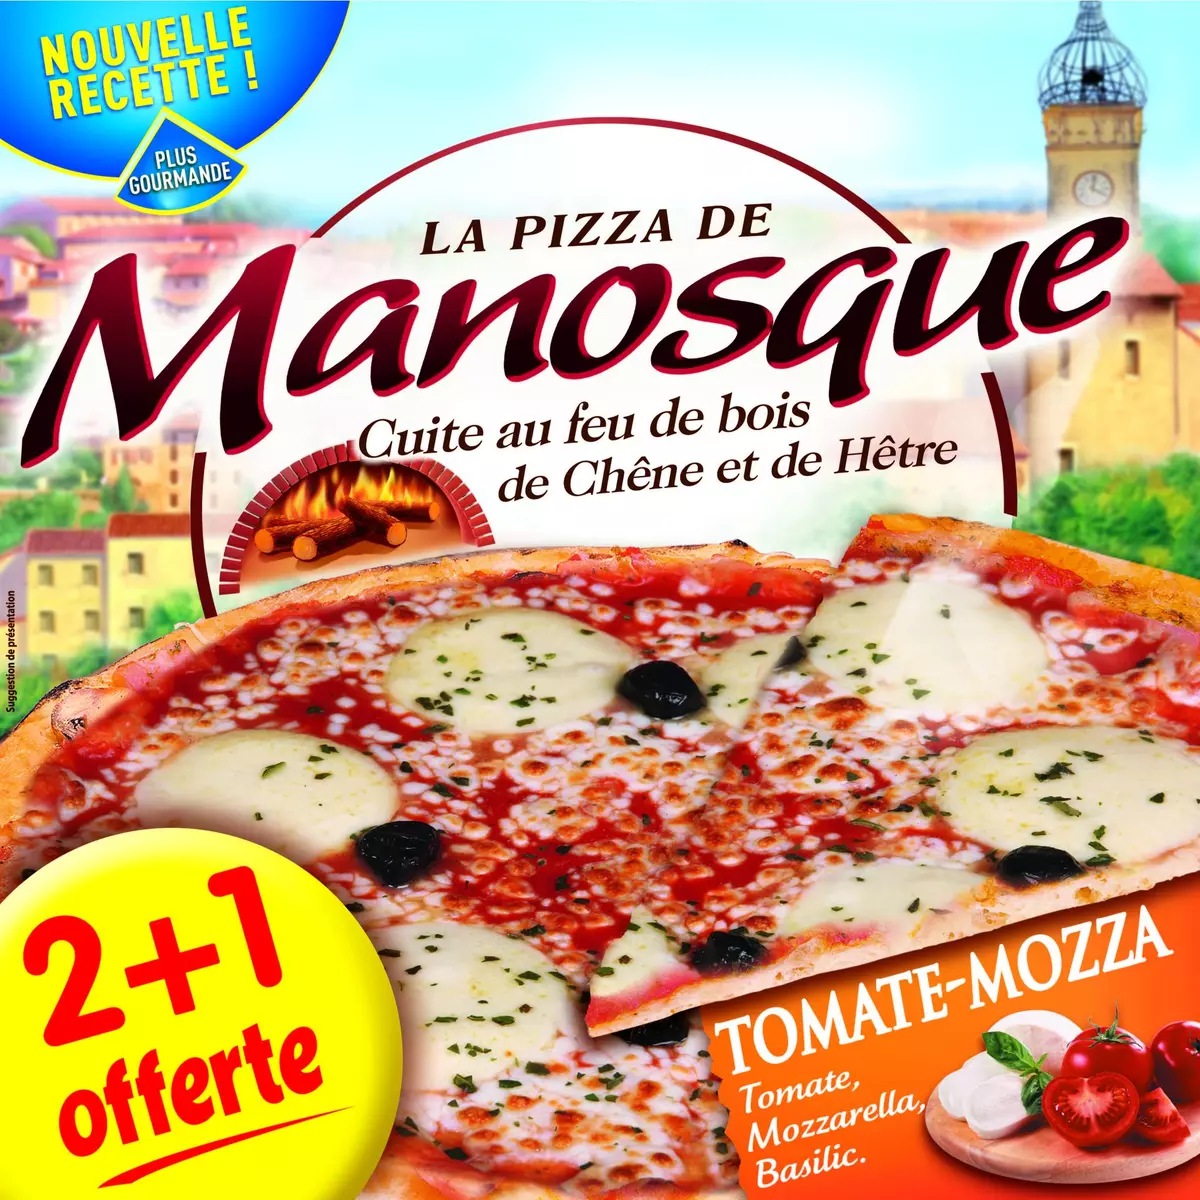 MANOSQUE Pizza tomate mozzarella cuite au feu de bois 2 + 1 offerte 400g